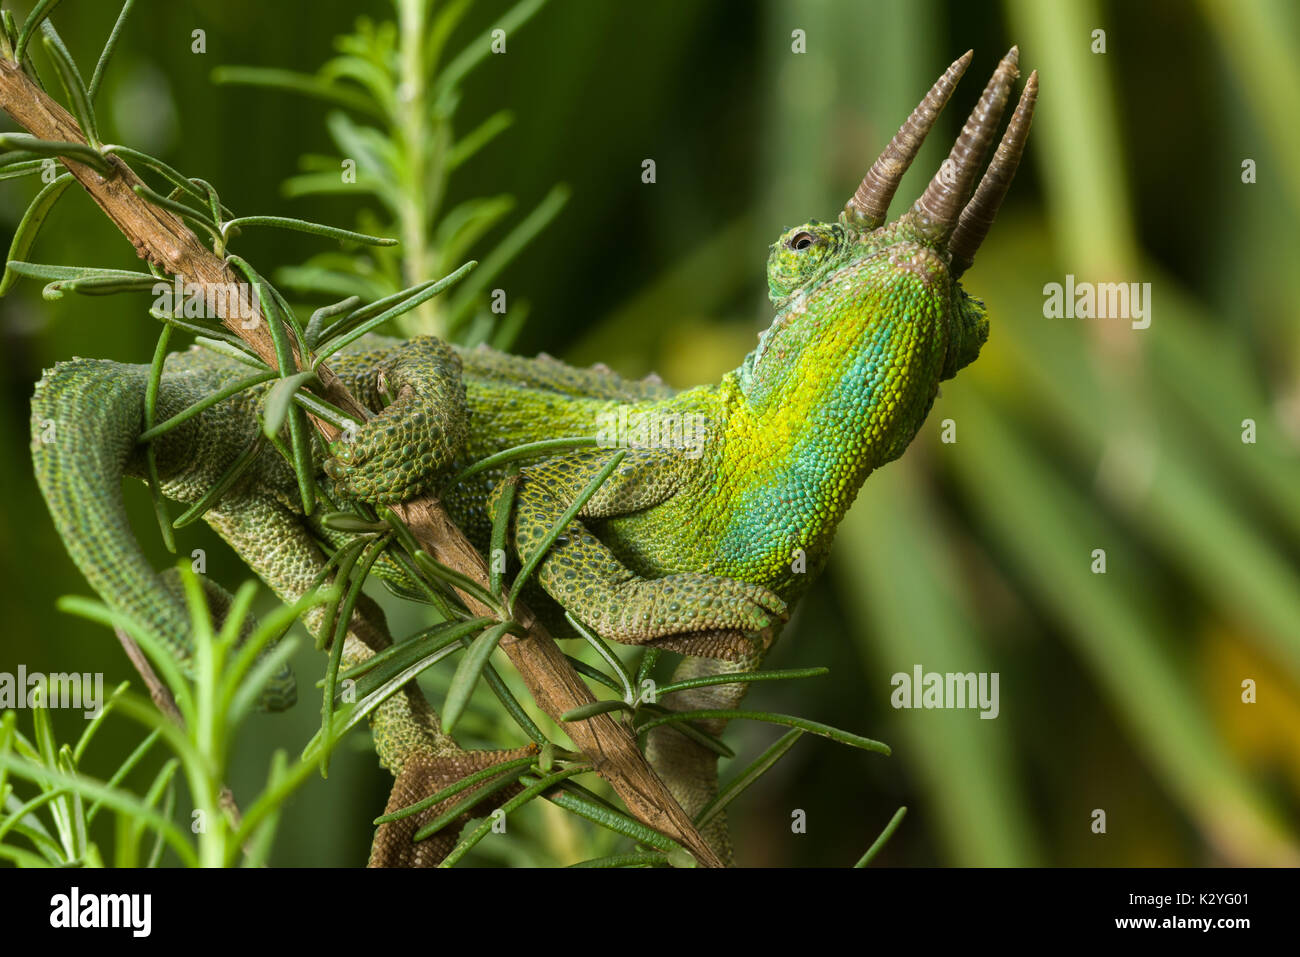 Male adult Jackson's chameleon (Trioceros jacksonii jacksonii) on branch, Nairobi, Kenya Stock Photo